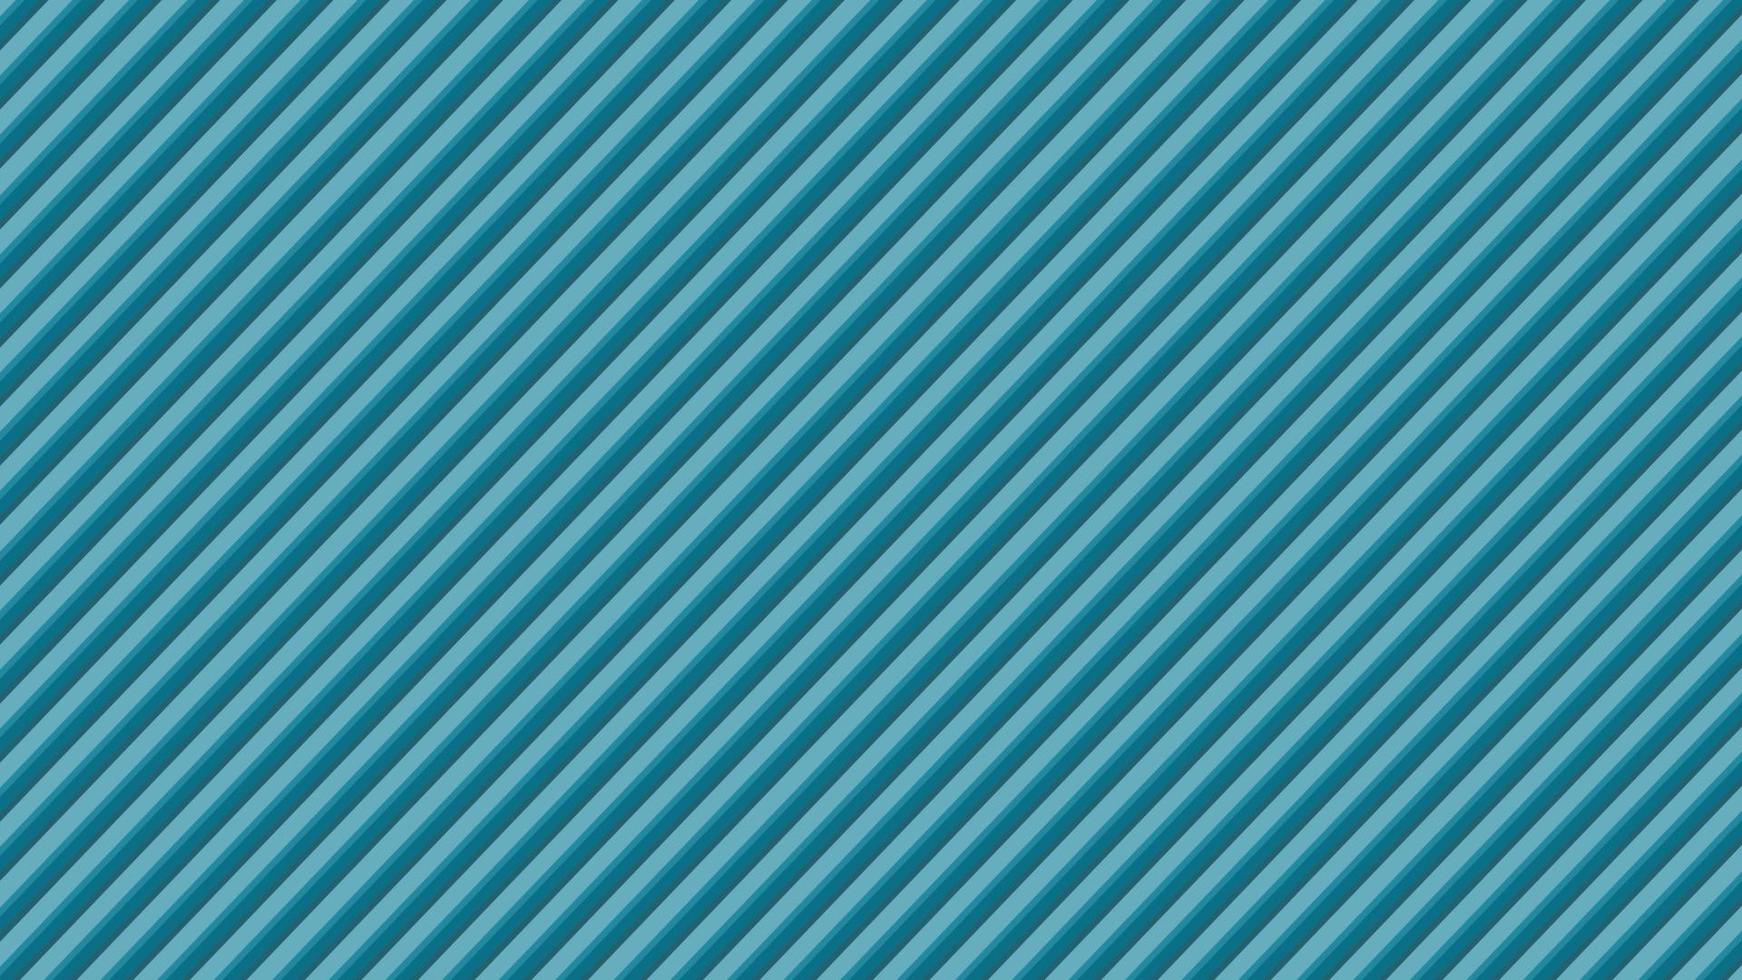 rayas diagonales patrón de líneas horizontales, telón de fondo. estampado textil. perfecta para decorar, tela, telón de fondo, hermoso papel de regalo o papel tapiz. ilustración vectorial vector